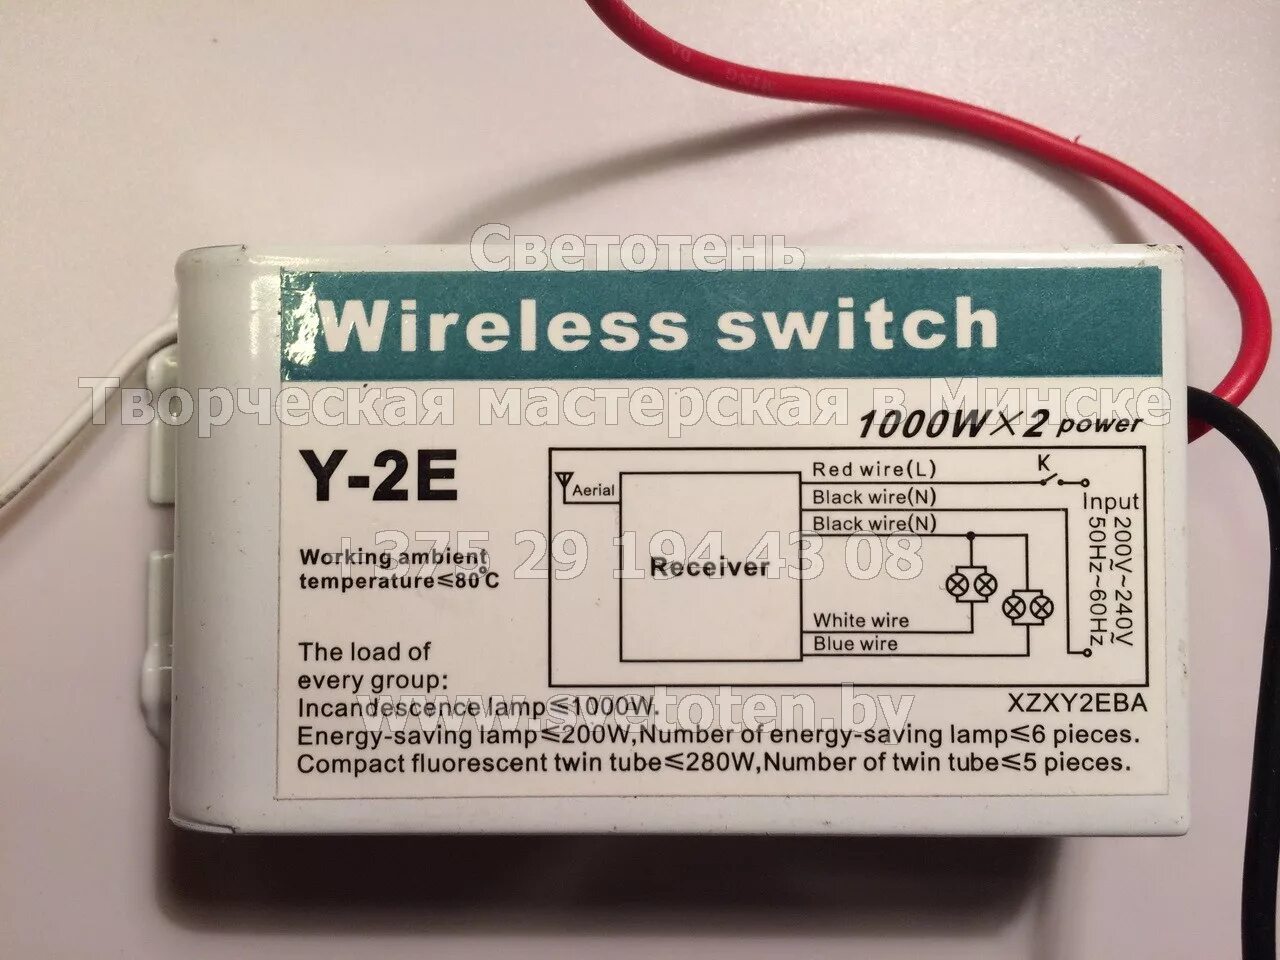 Блок для люстры купить. Wireless Switch y-7e 1000wx3 Power. Блок питания Wireless Switch y-2e 1000w 2 Power. Блок питания Wireless Switch y-2e 1000w 2 Power люстра. Kingda KD-3 Wireless блок.